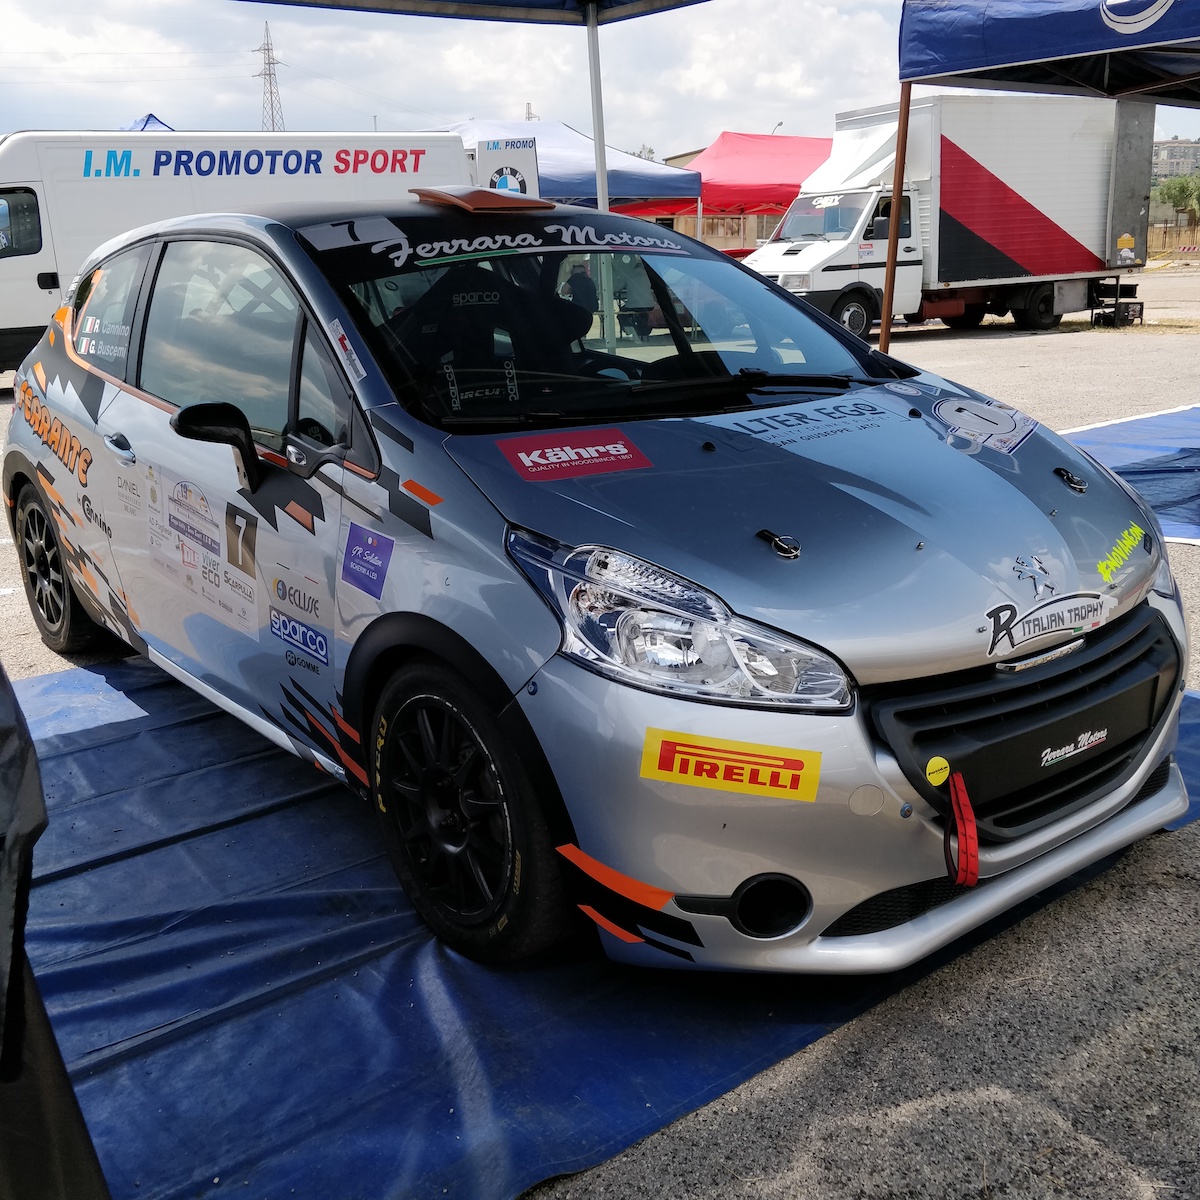 Peugeot Motorsport